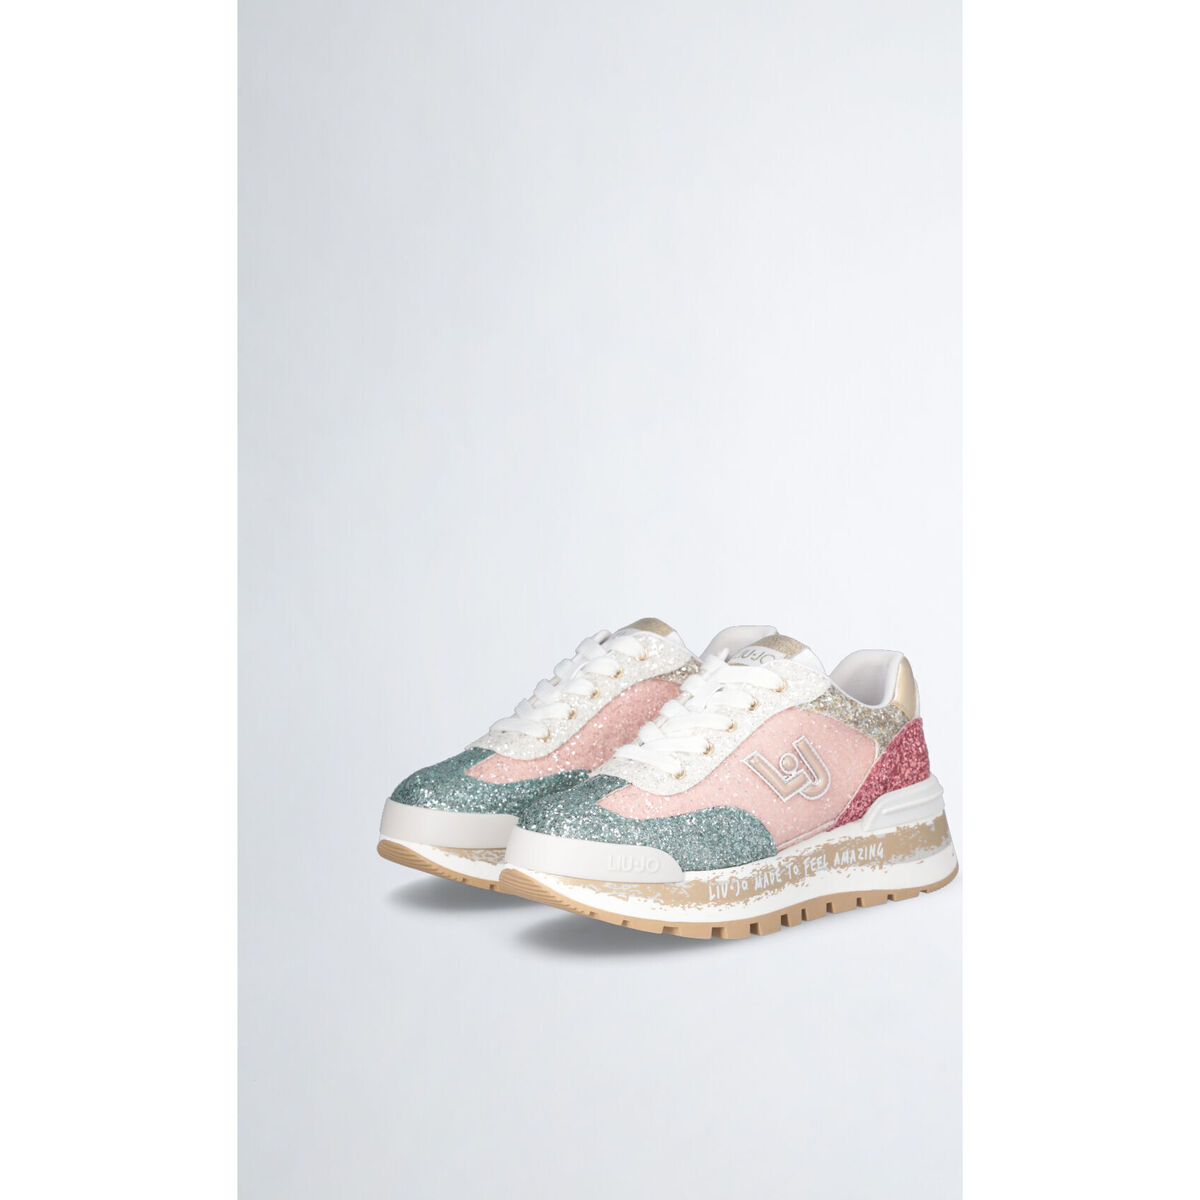 Liu Jo Multicolore Sneakers plateforme glitter 8Nn76Iv1